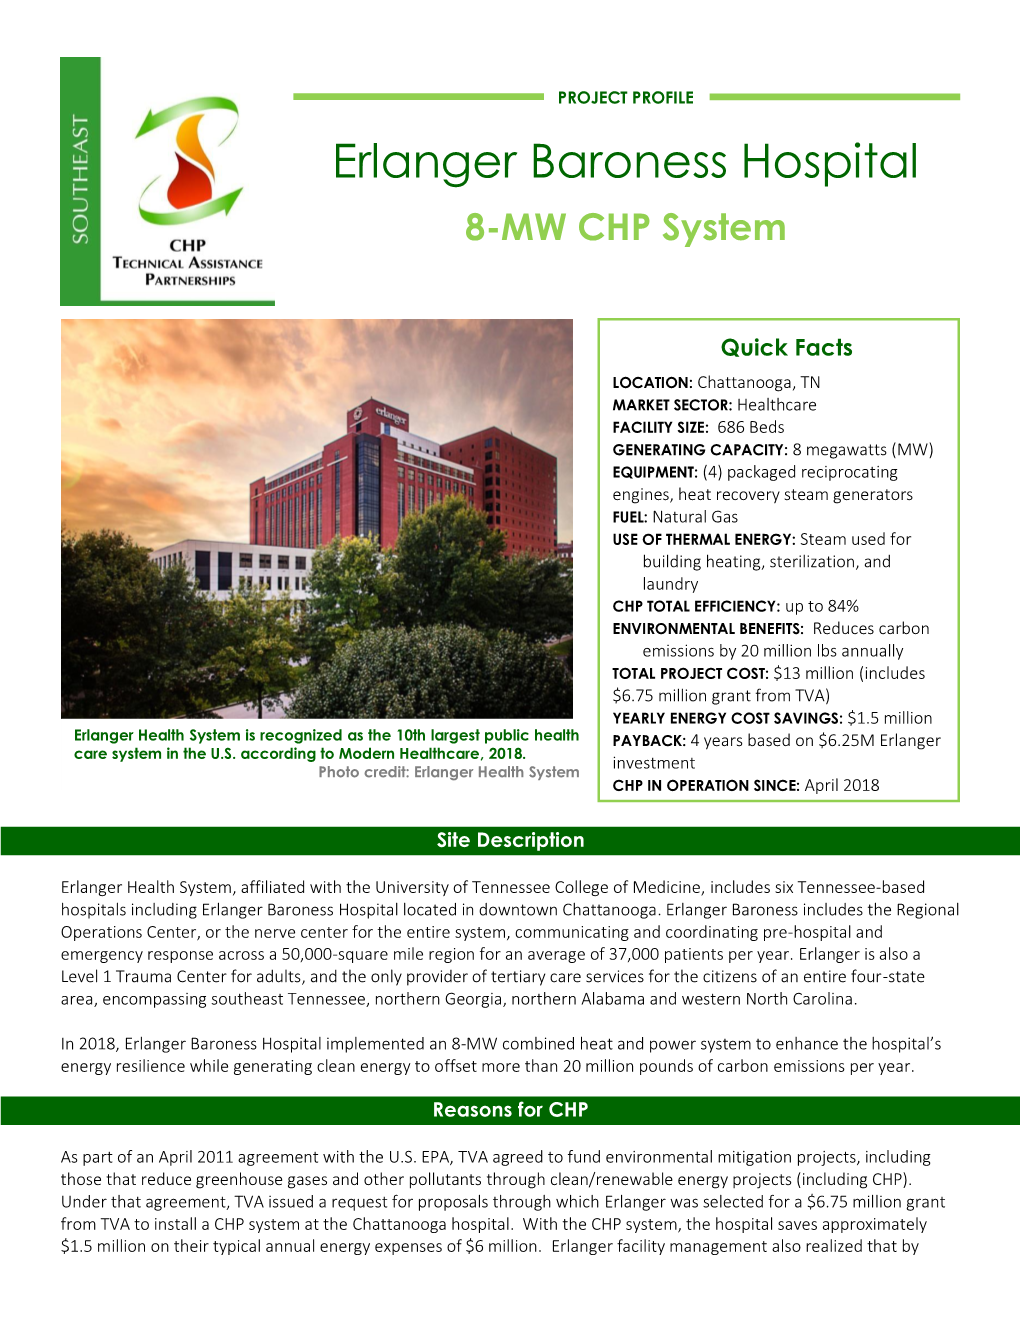 Erlanger Baroness Hospital 8-MW CHP System